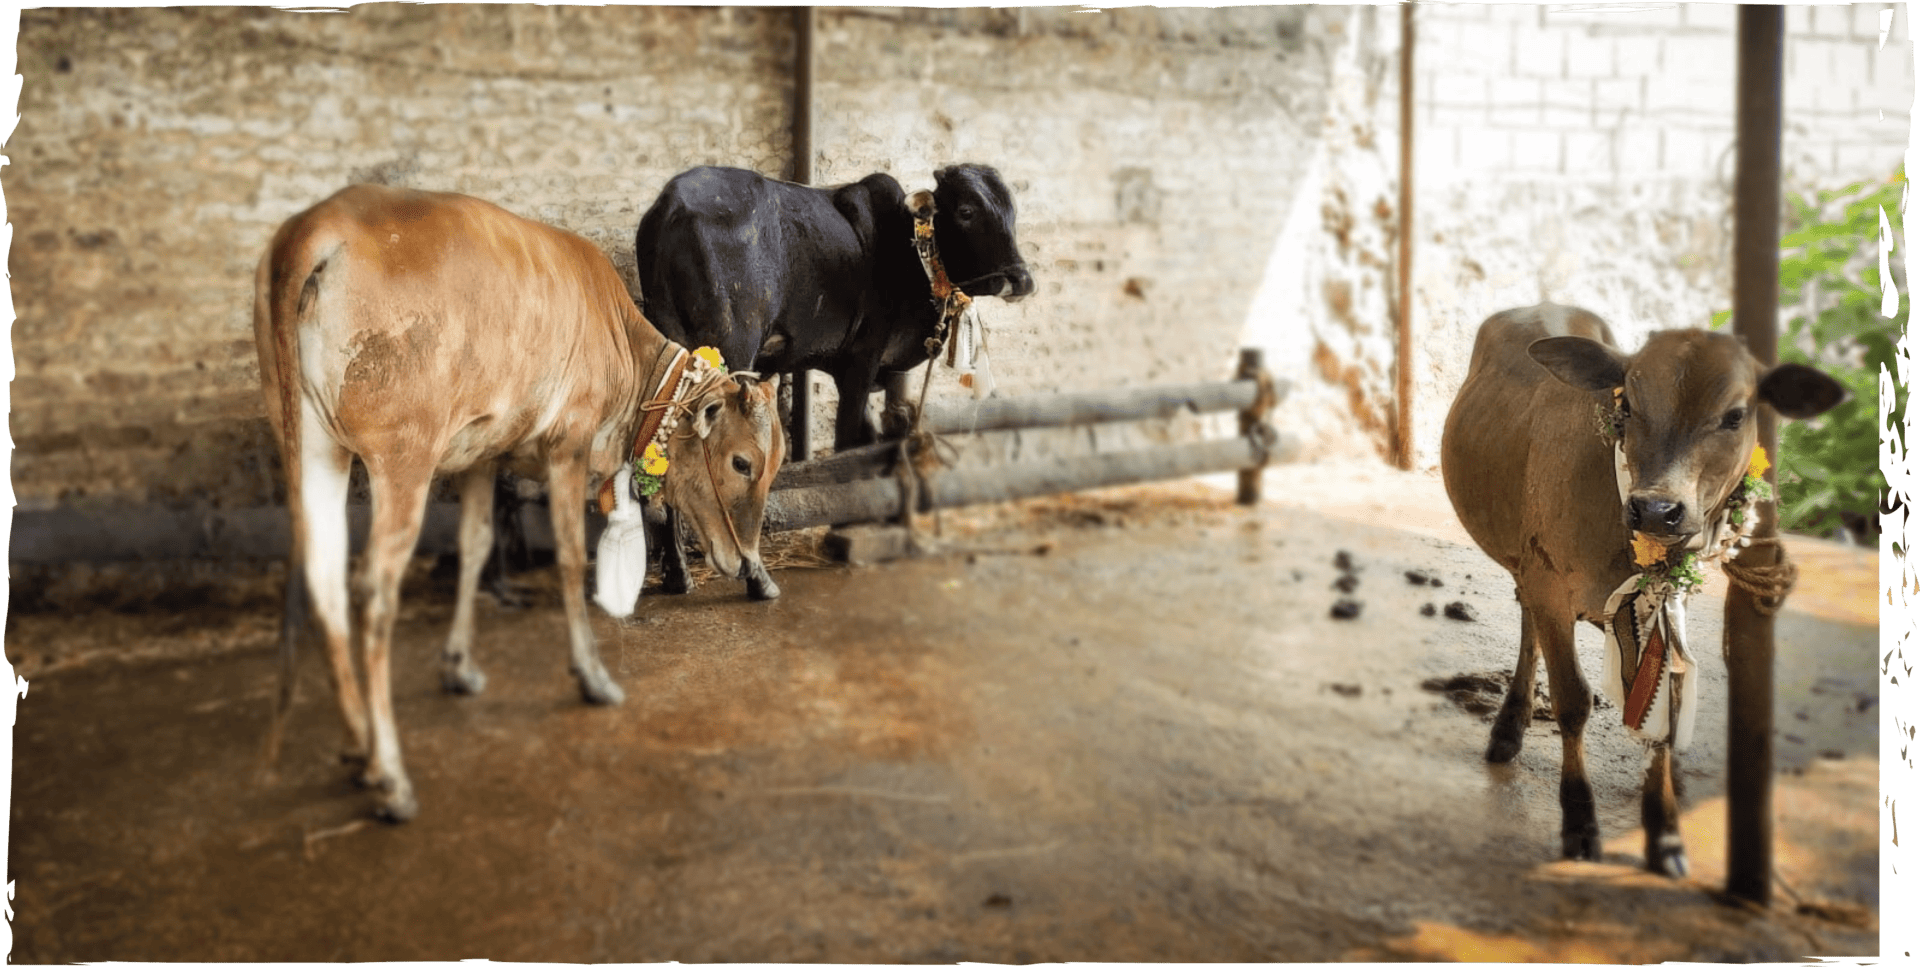 A holy cow and calves at Gurukulum.